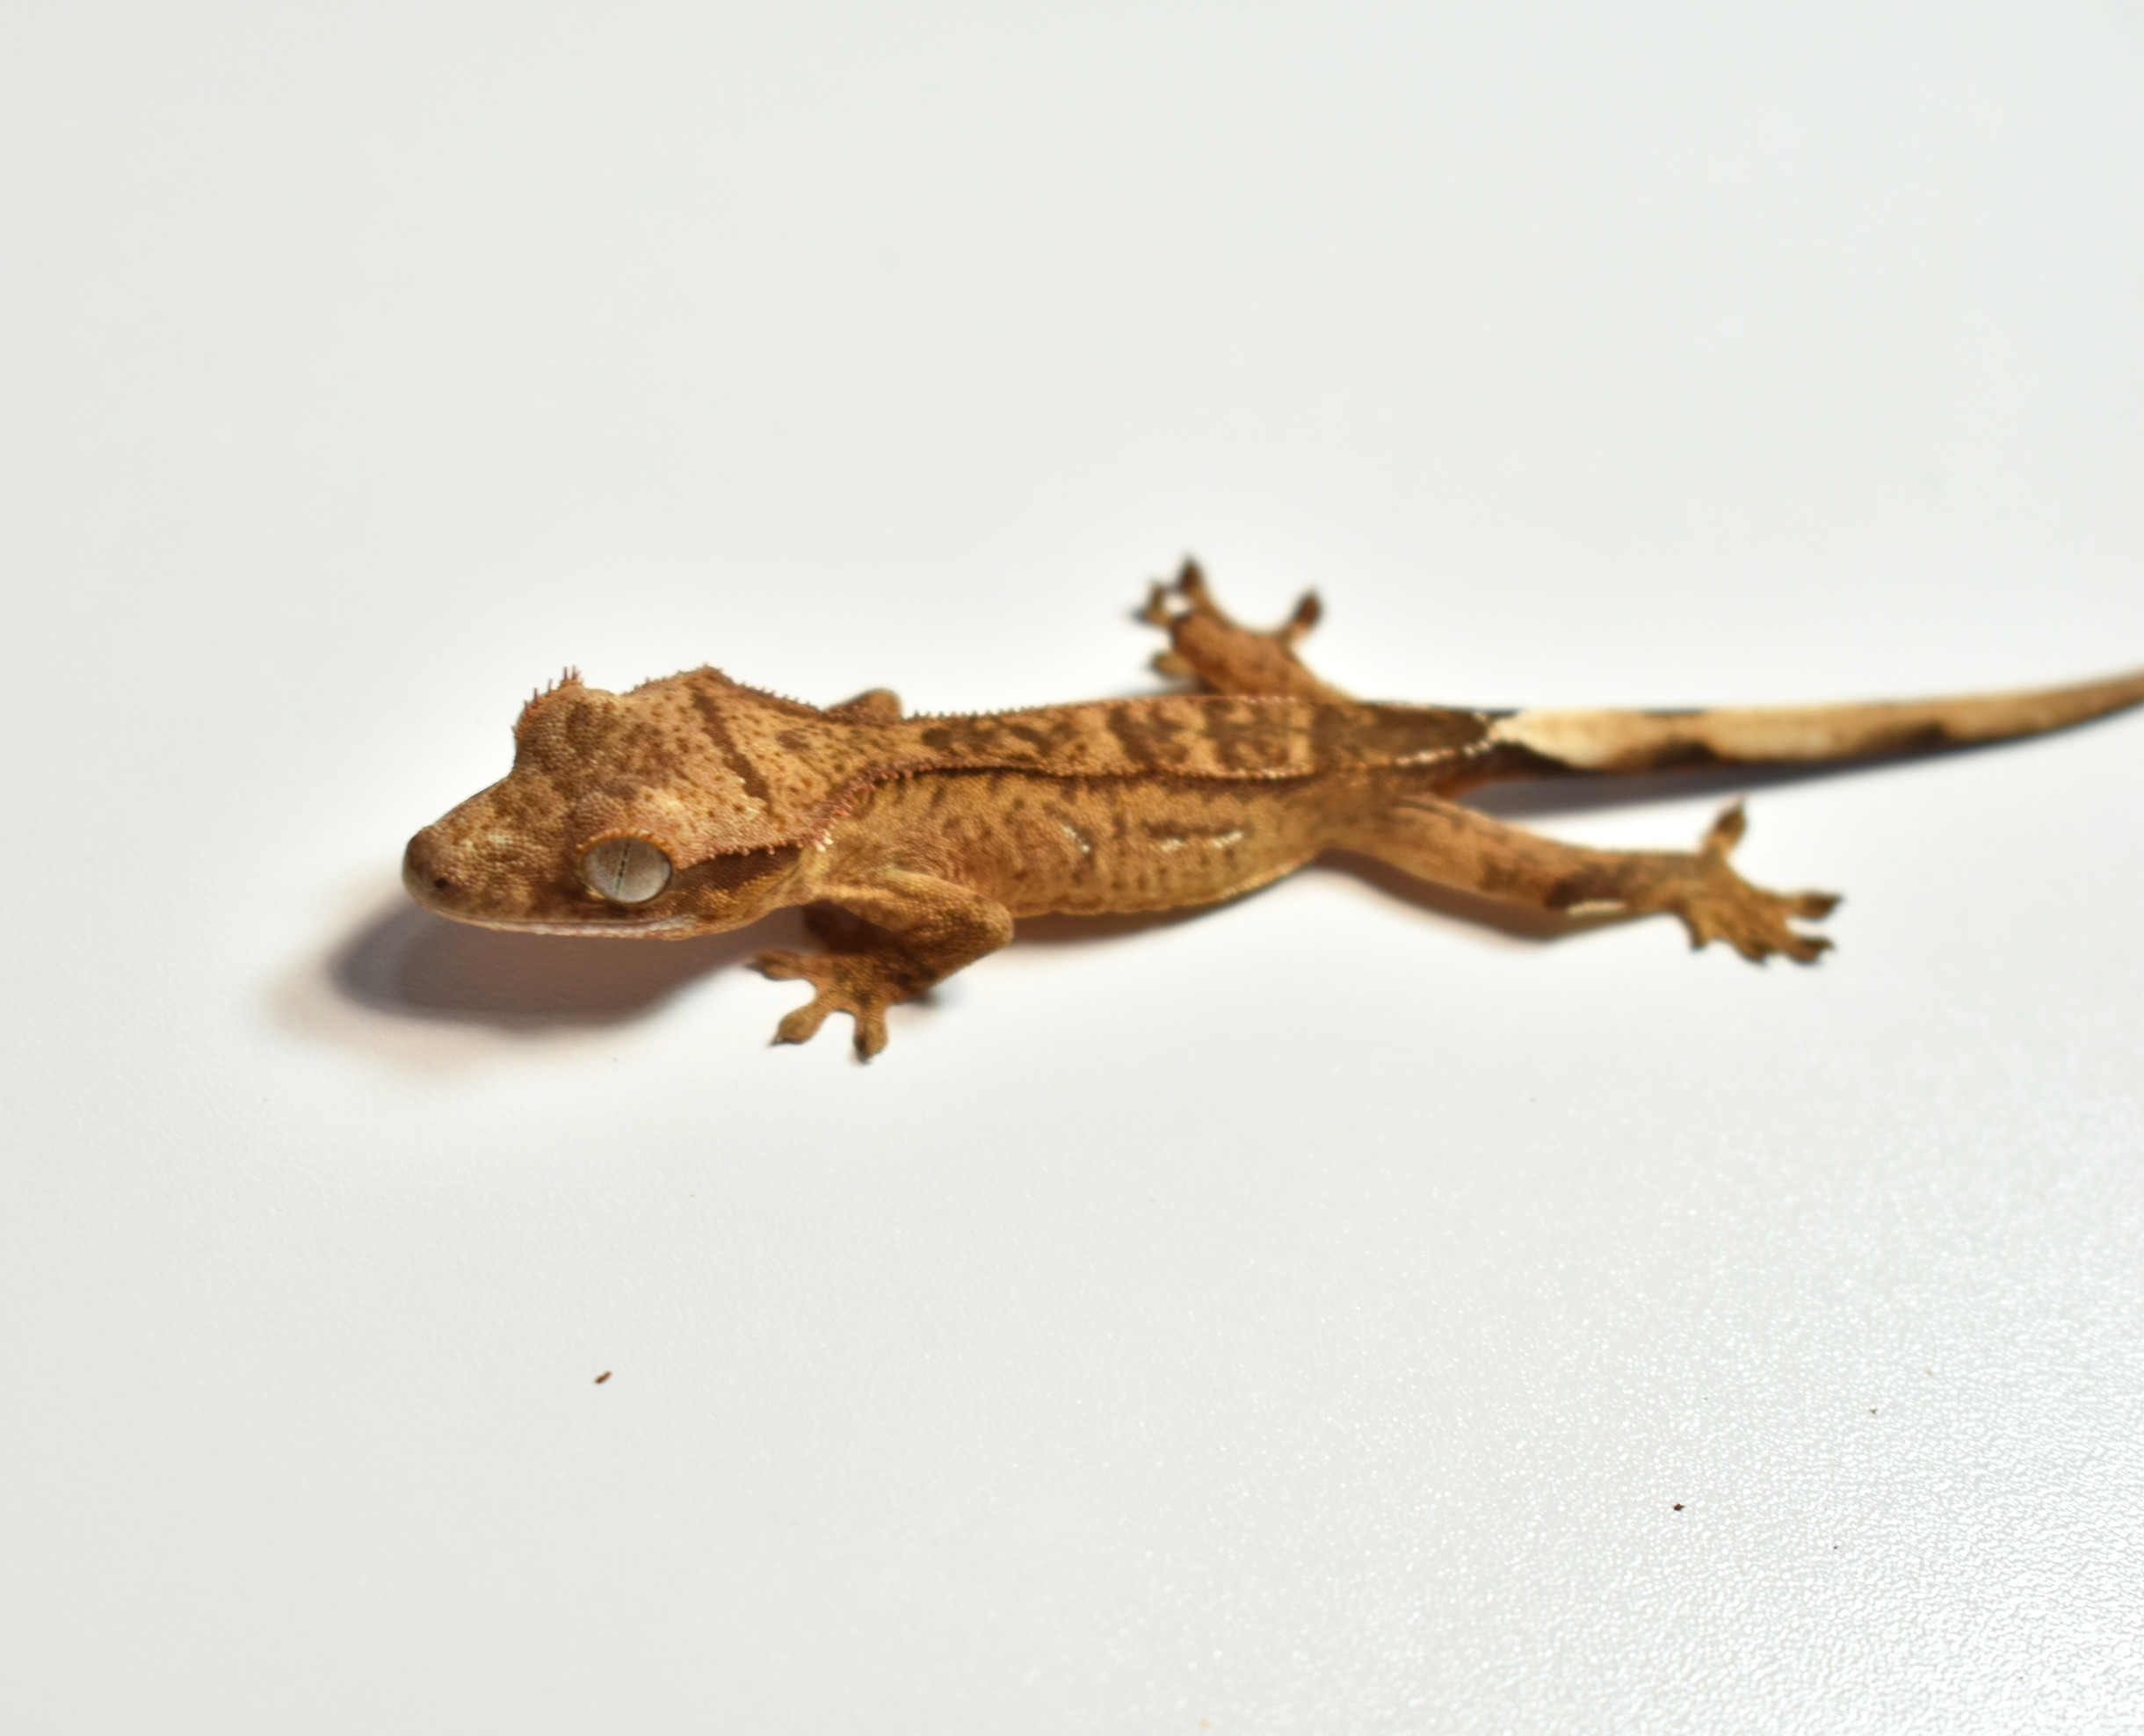 Phantom Pinstripe Crested Gecko by Bay gecko